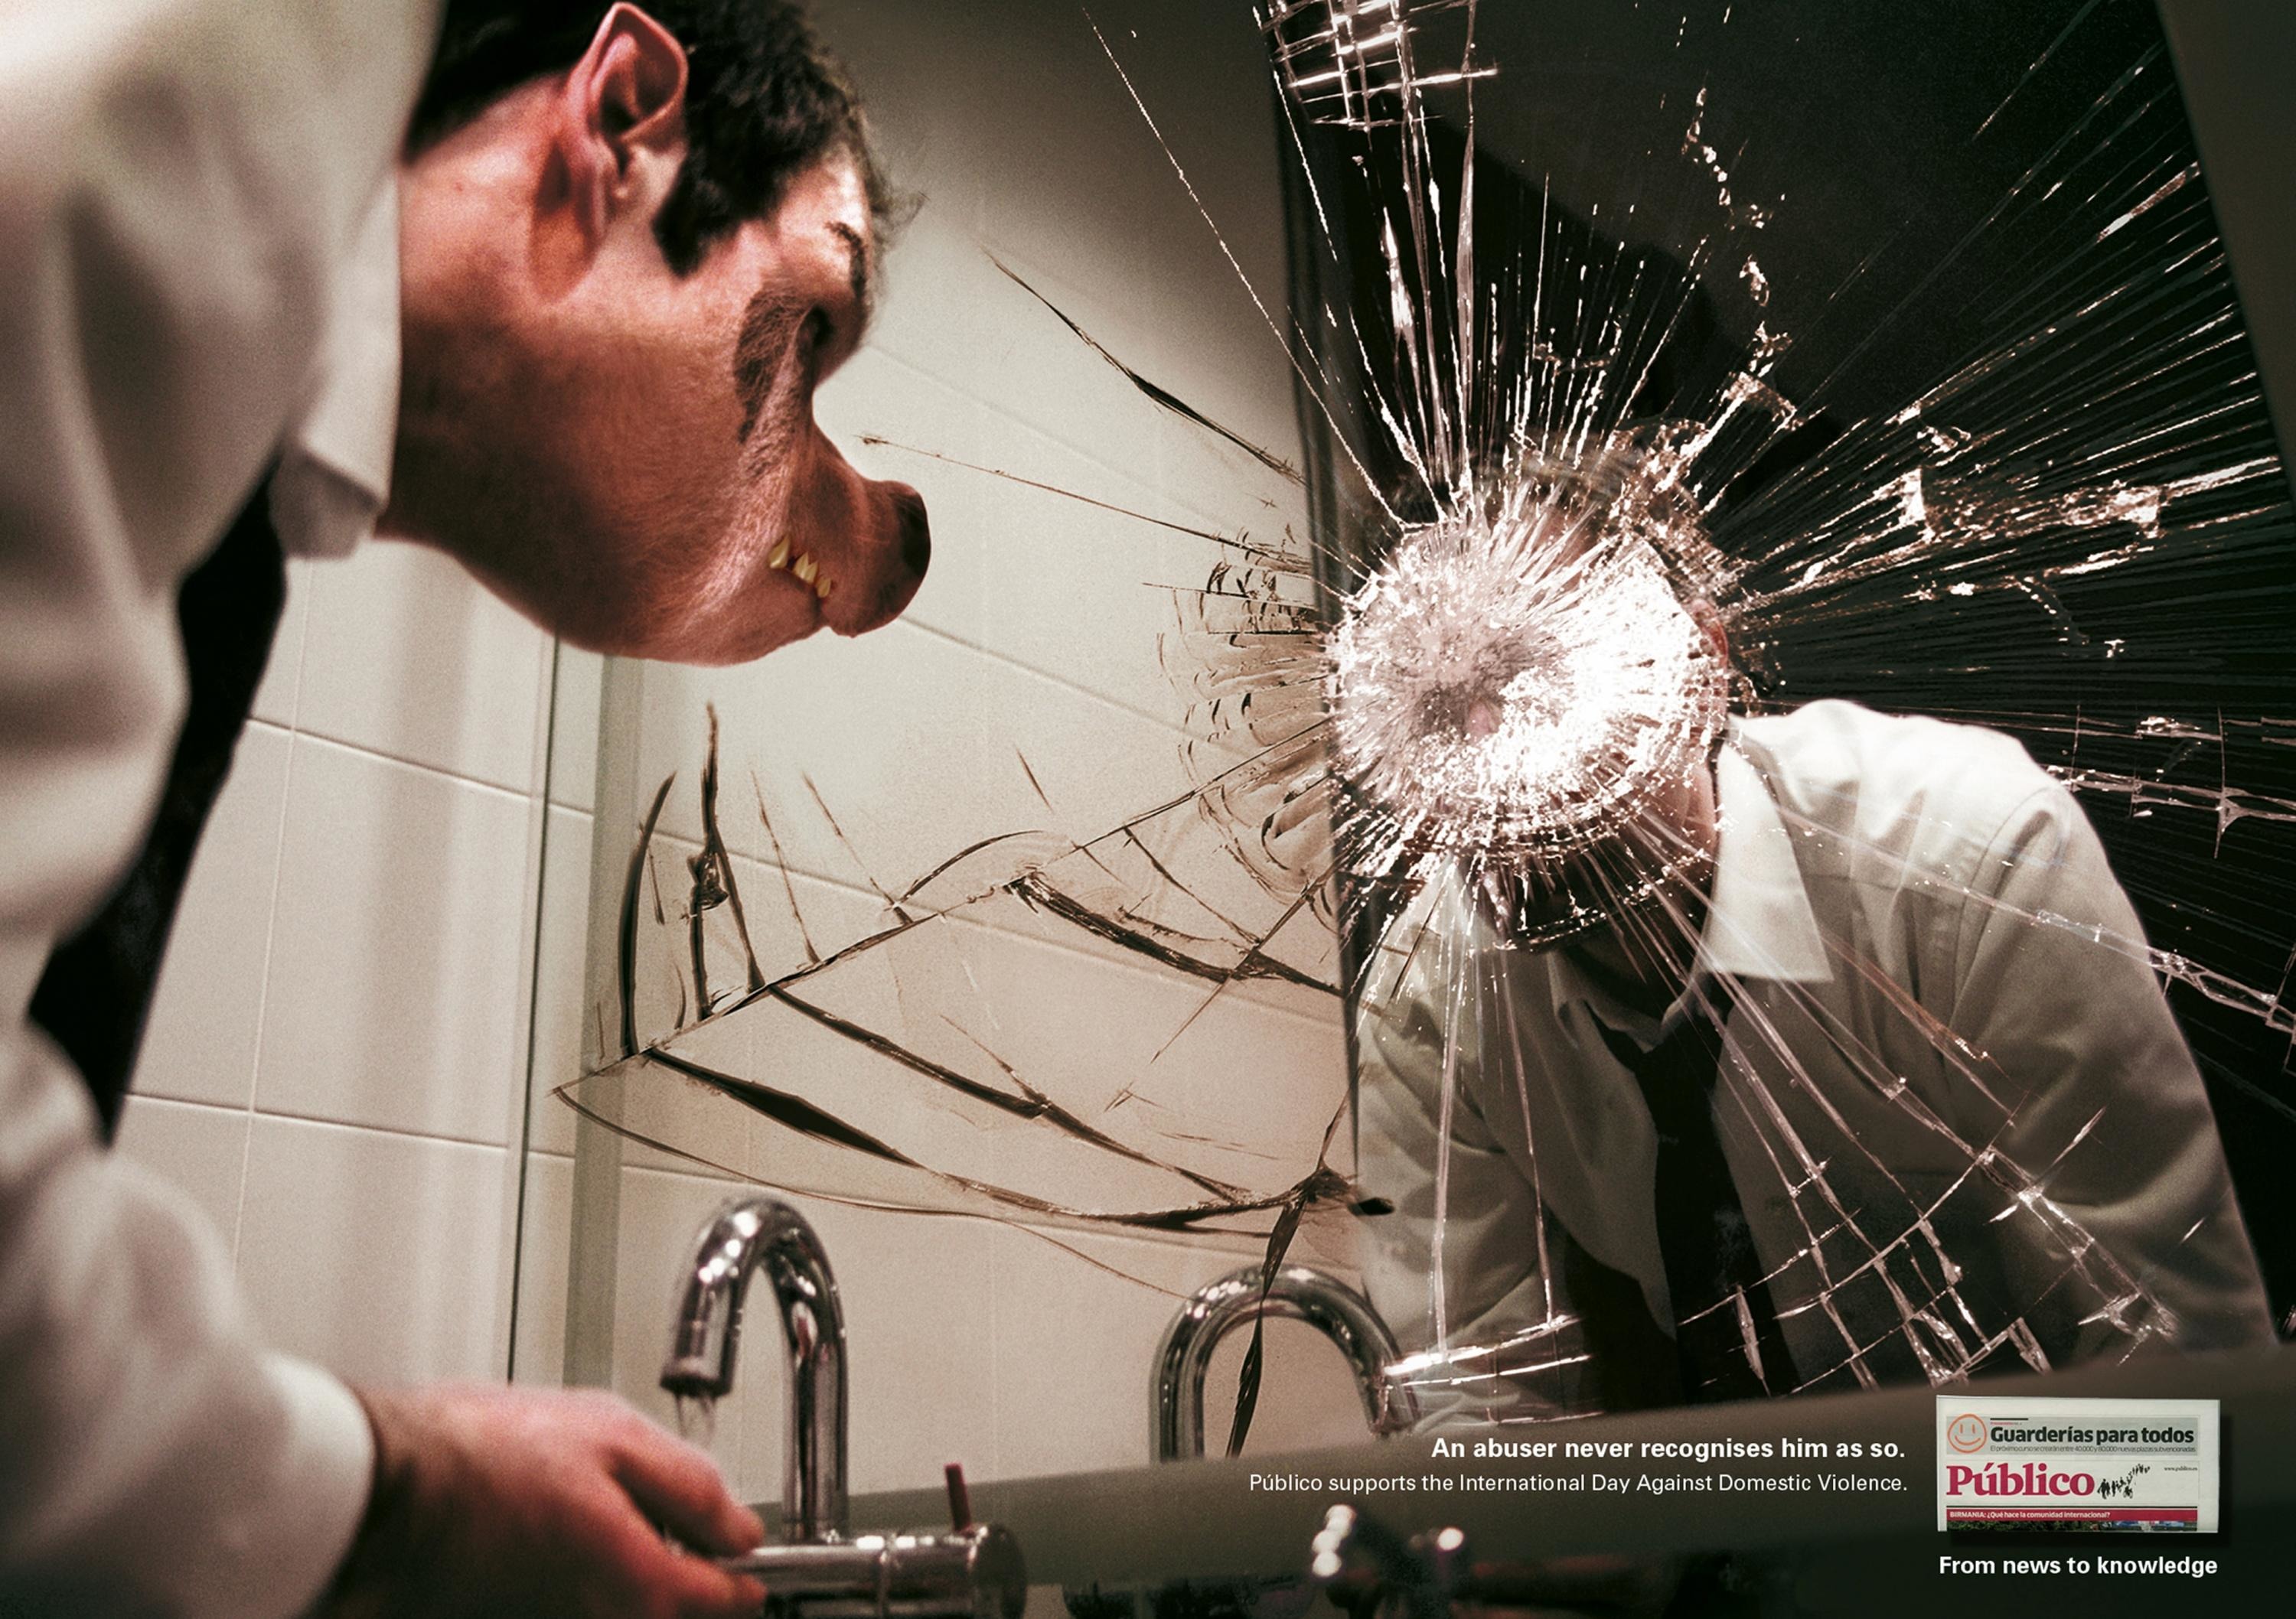 Мужчина разбил. Разбитое зеркало кулаком. Человек в разбитом зеркале. Человек разбивает зеркало.